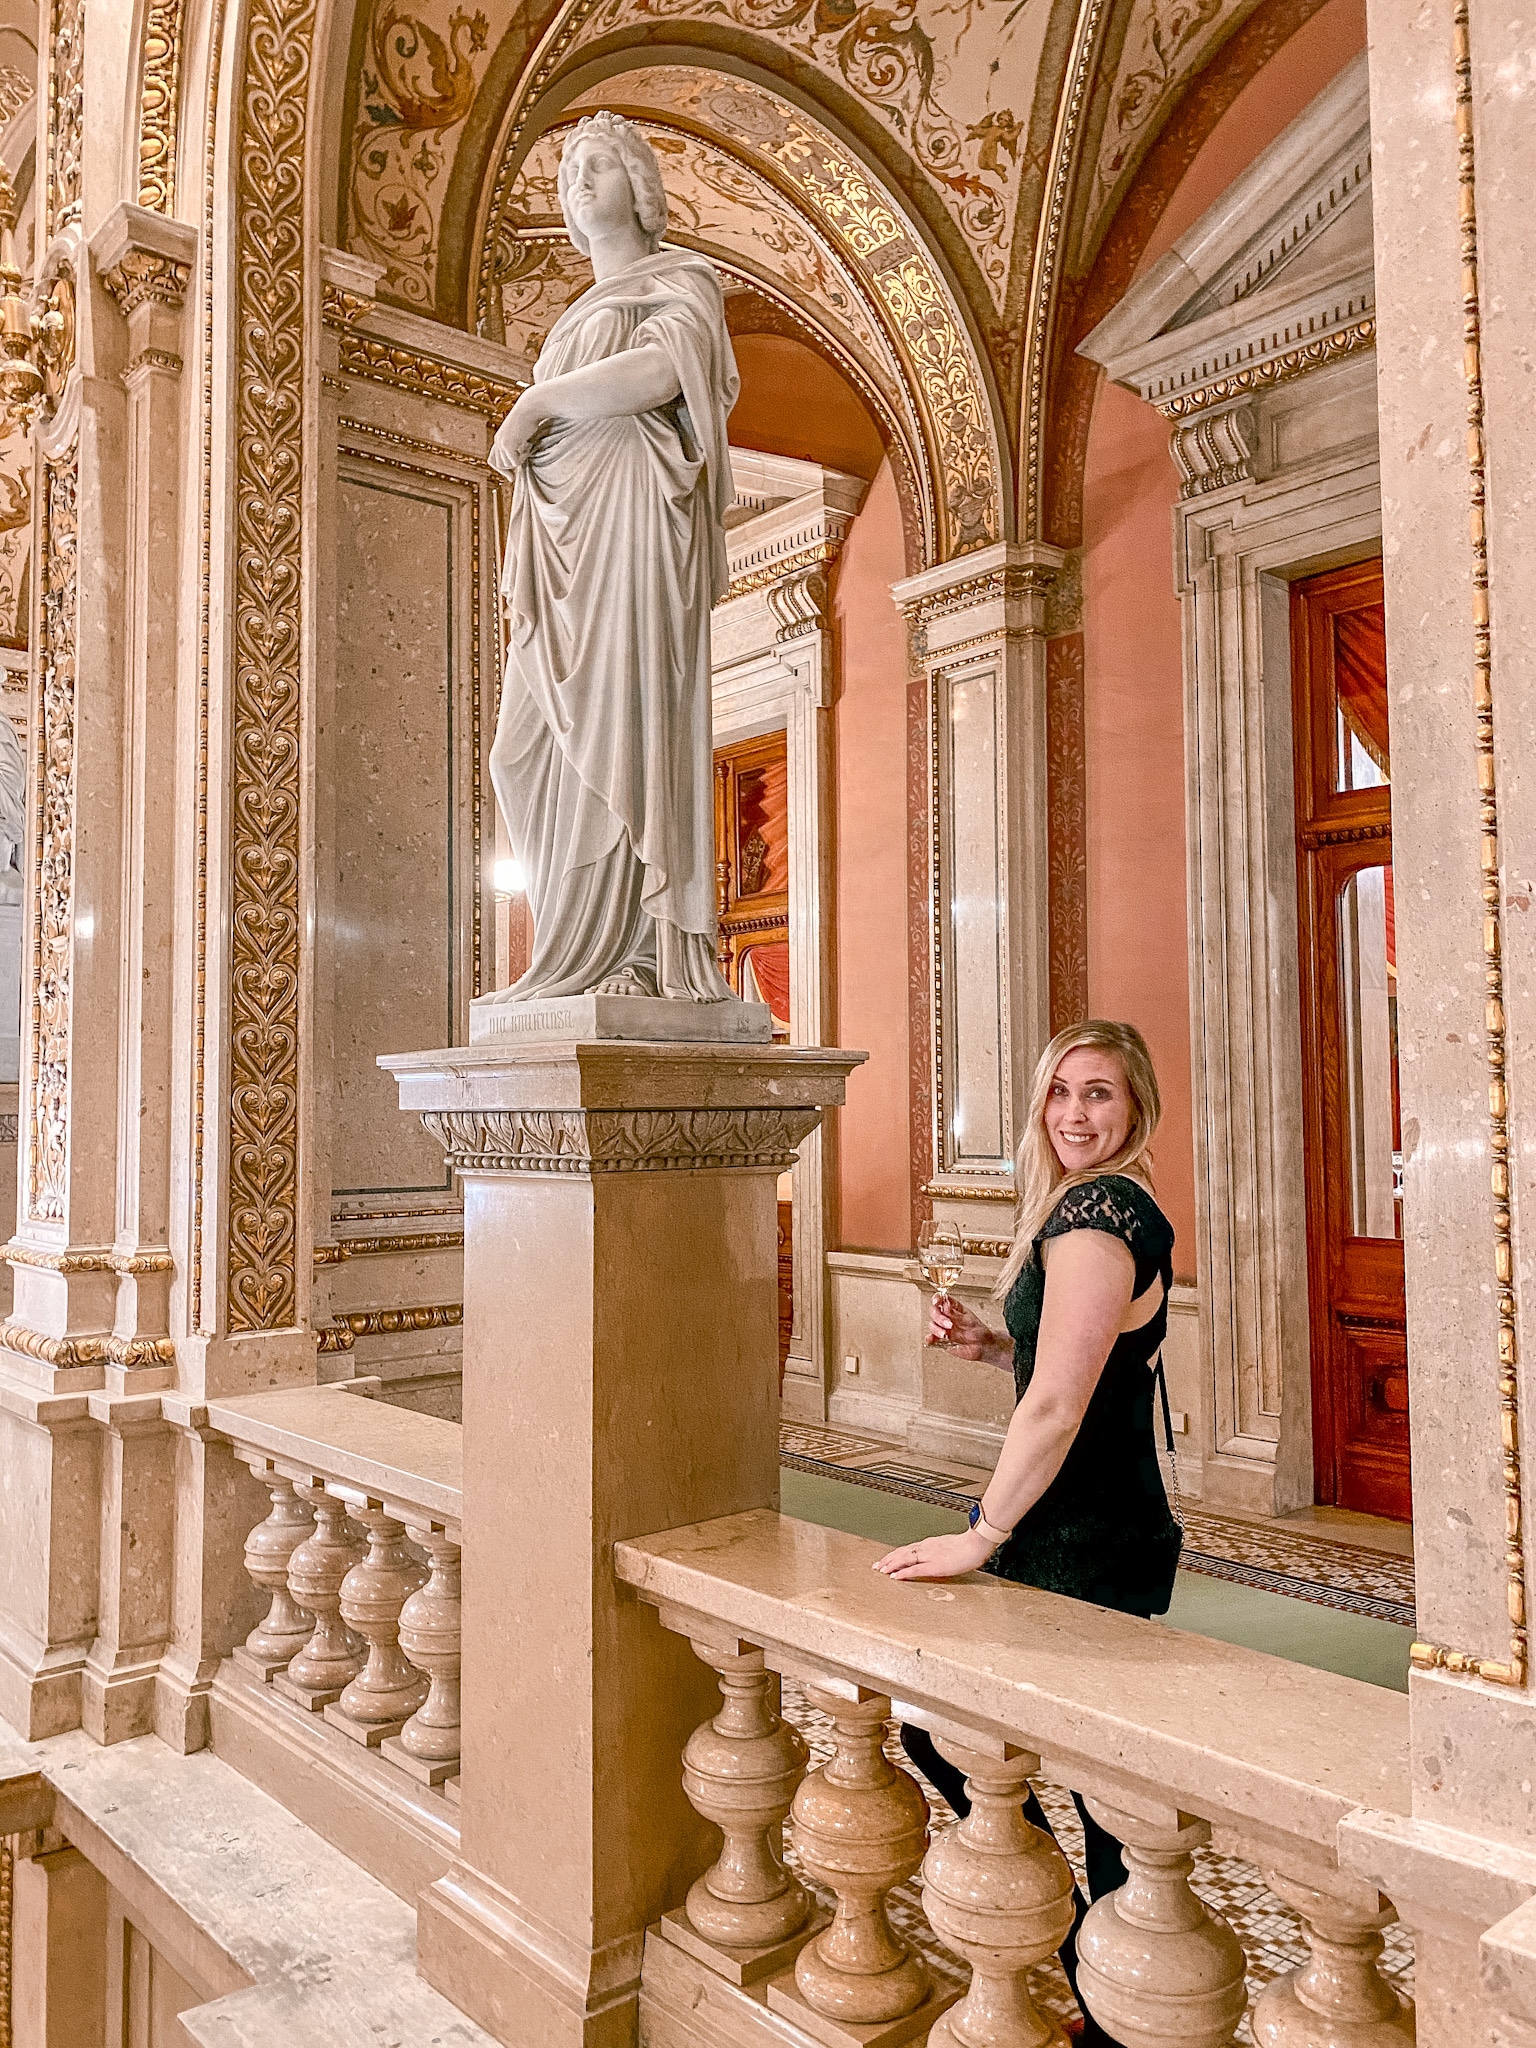 Erinn in the beautiful interior of Wiener Staatsoper (Vienna State Opera House). 